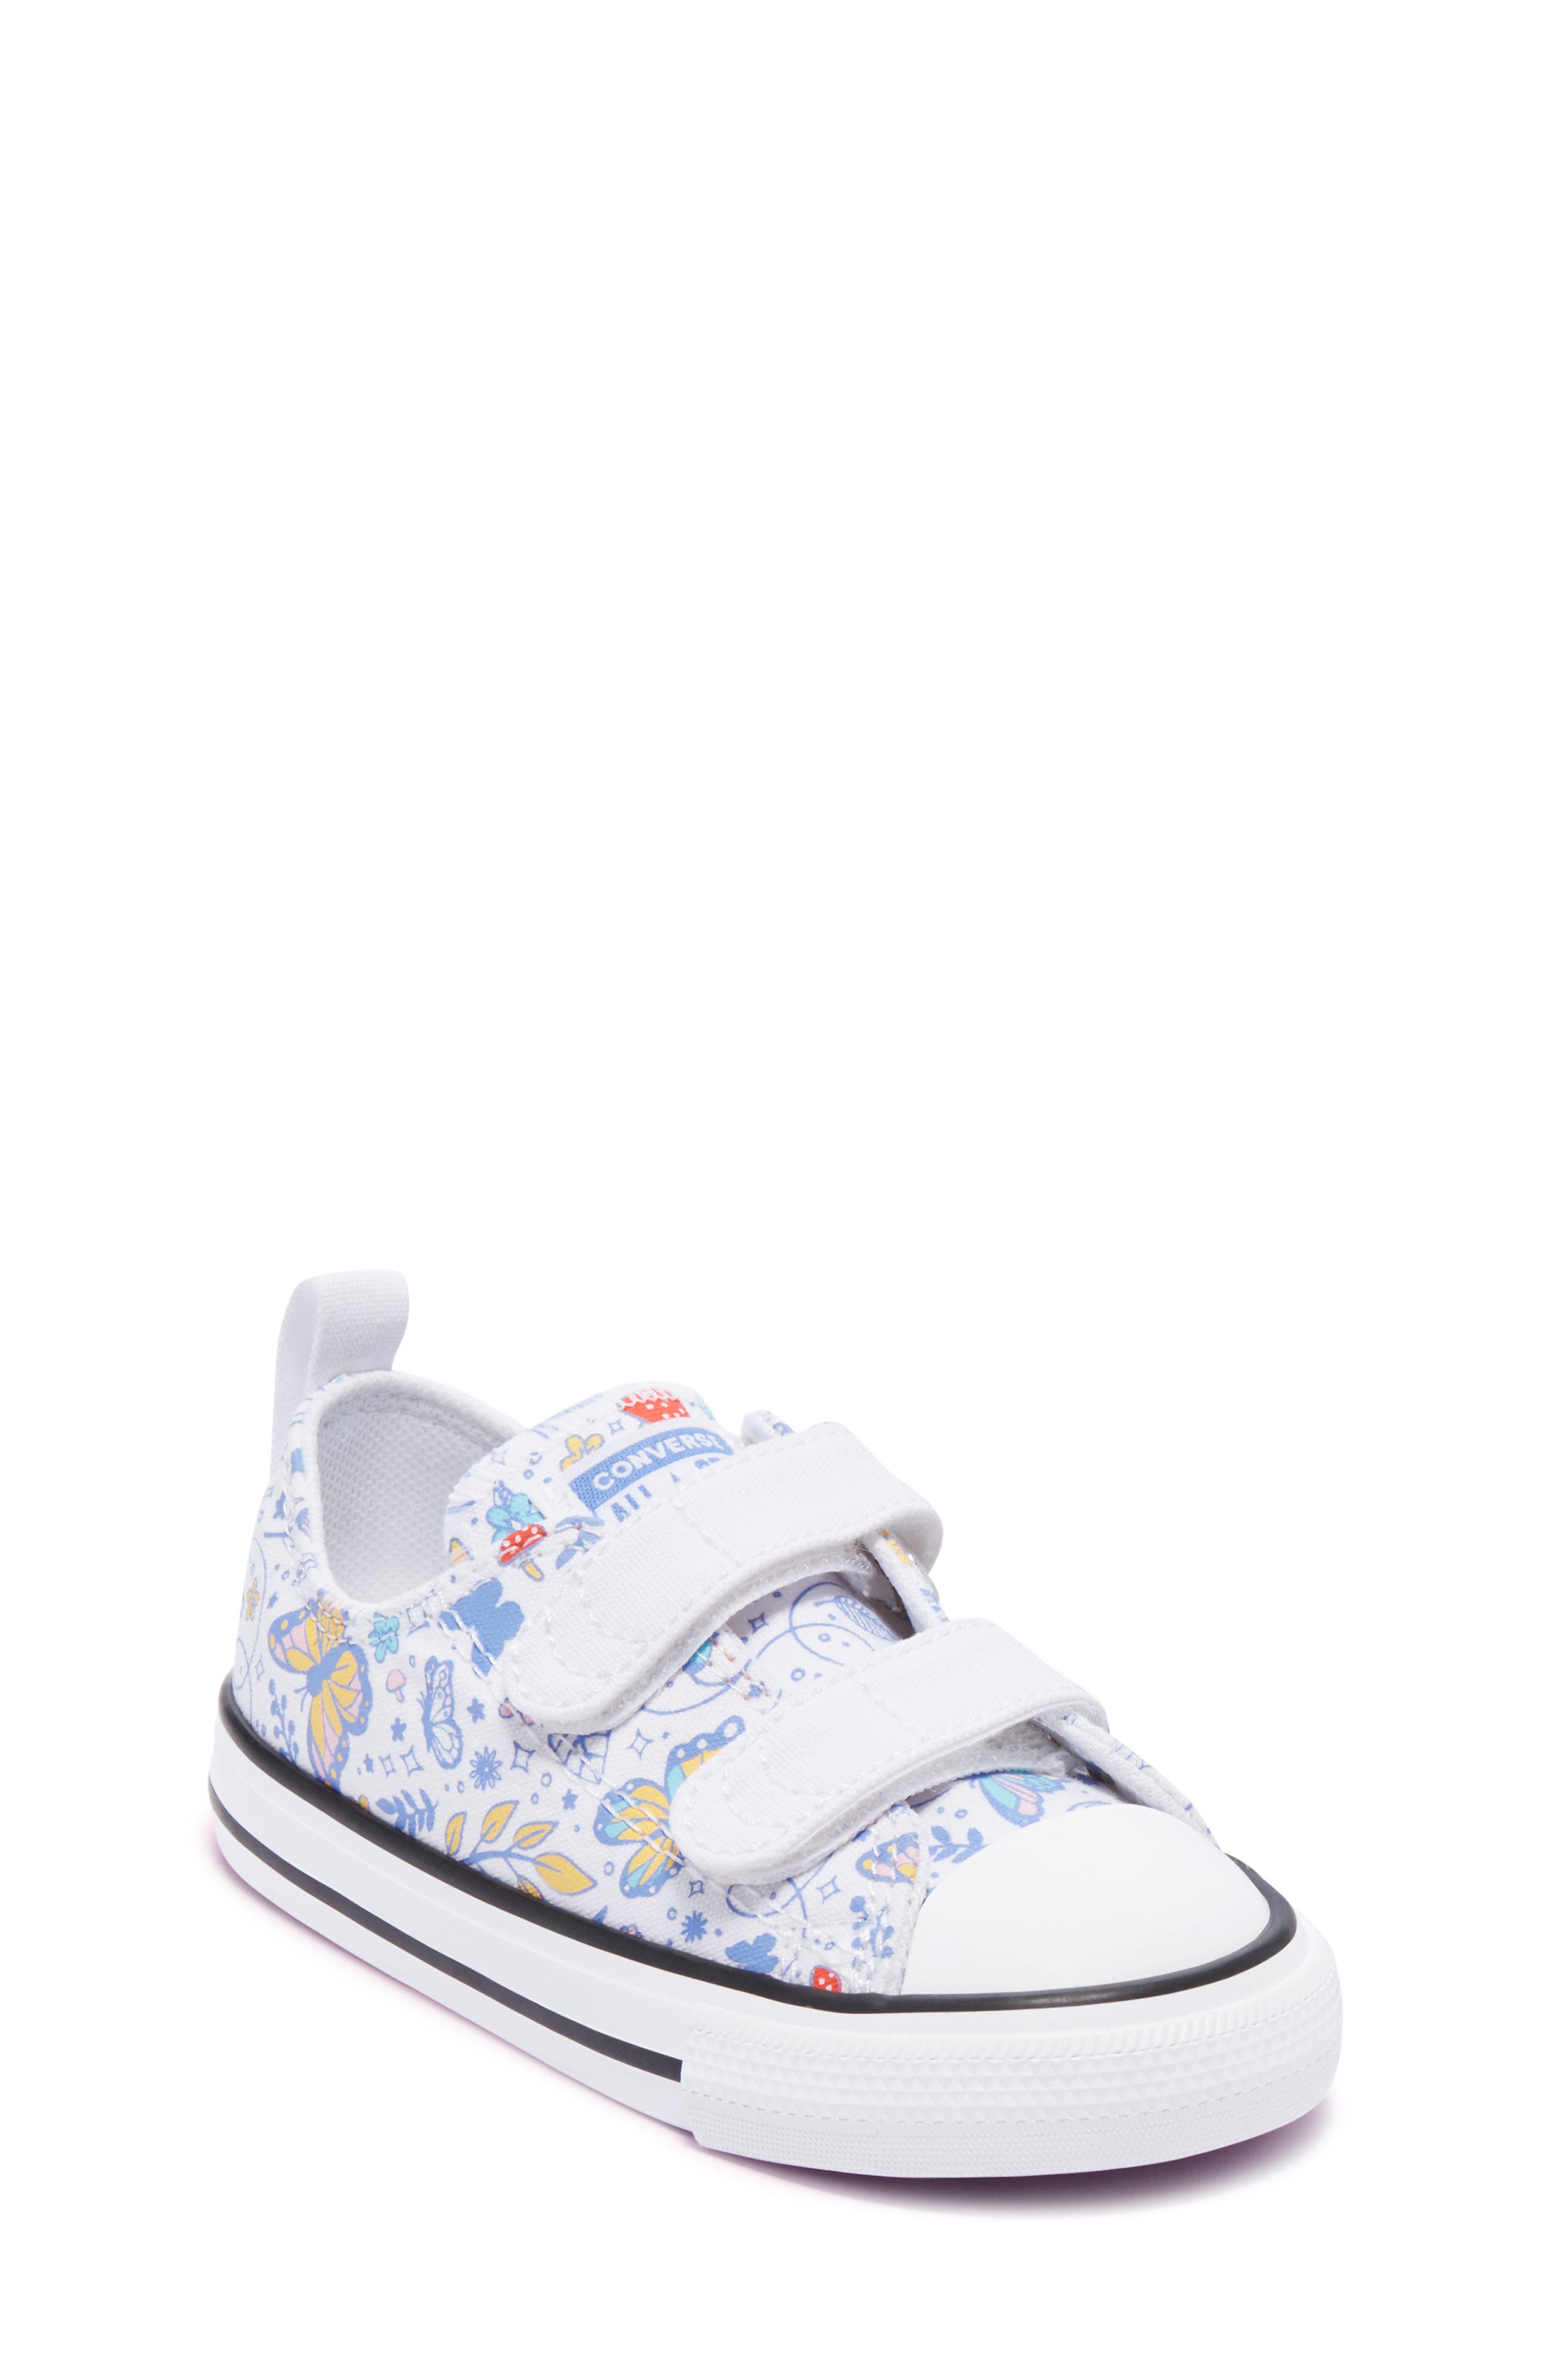 Baby Converse, Walker \u0026 Toddler Shoes 